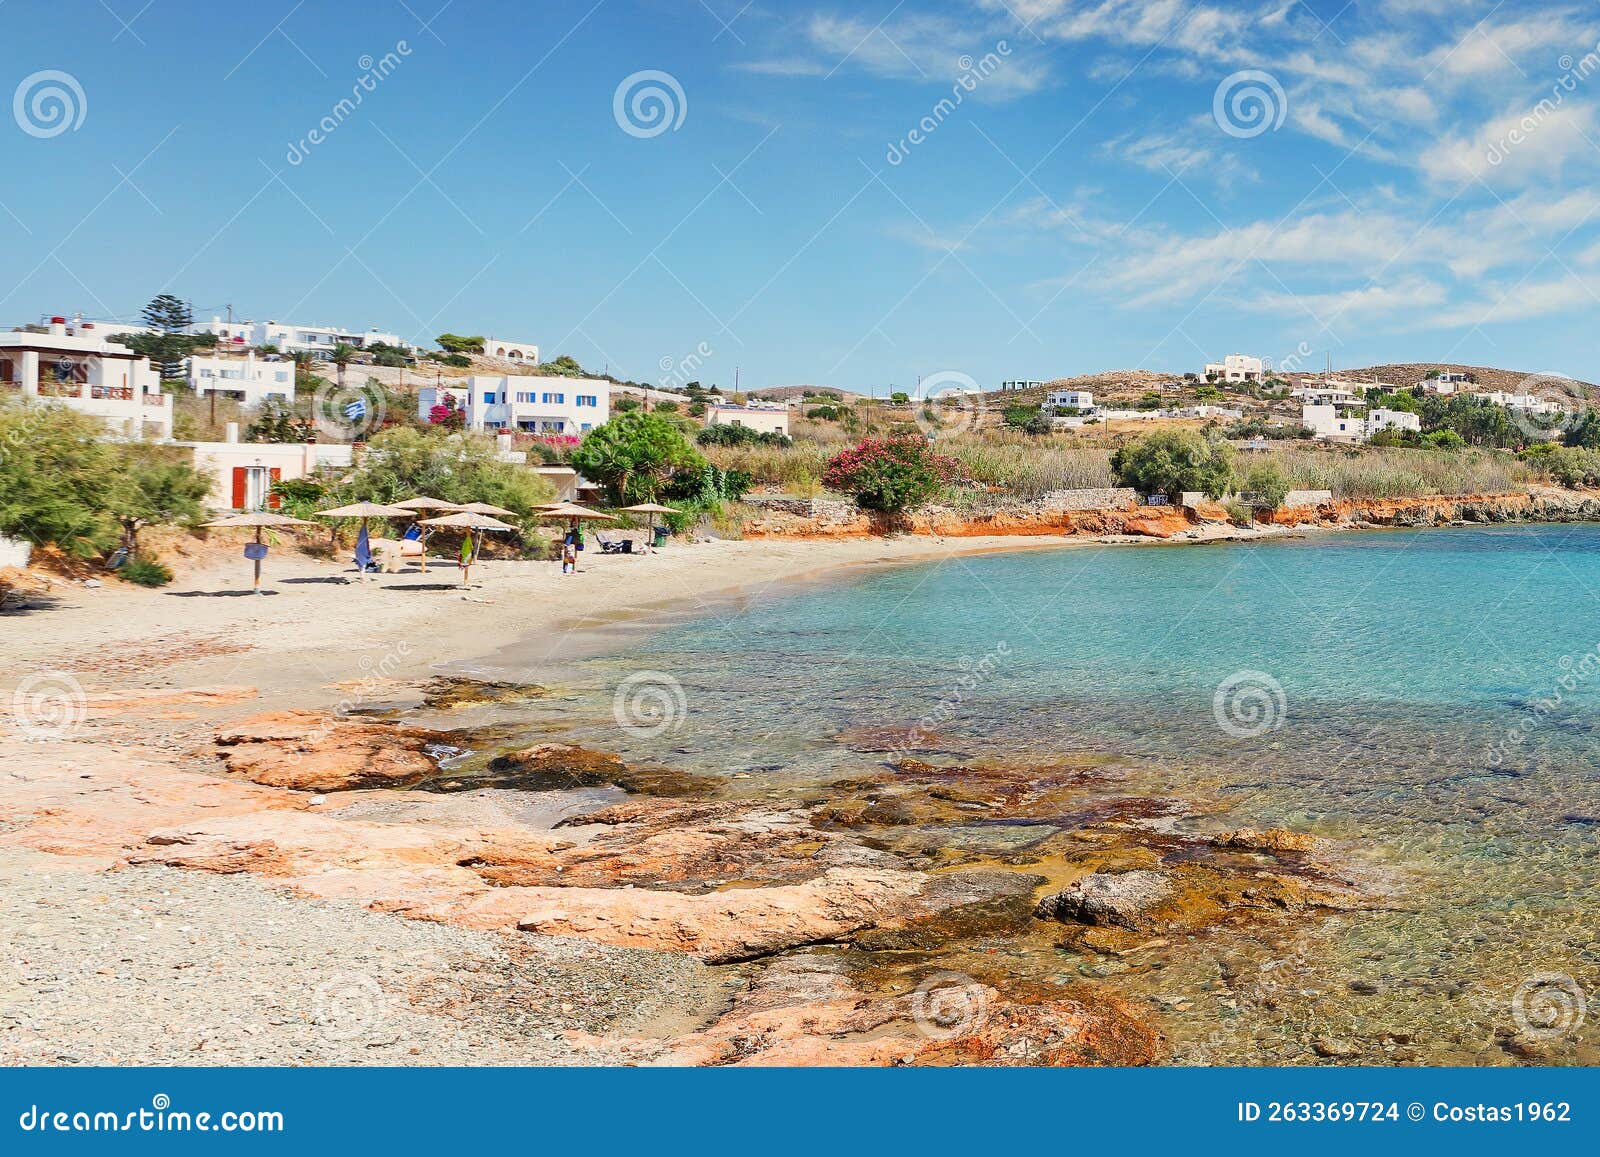 the sandy beach fabrica in syros, greece